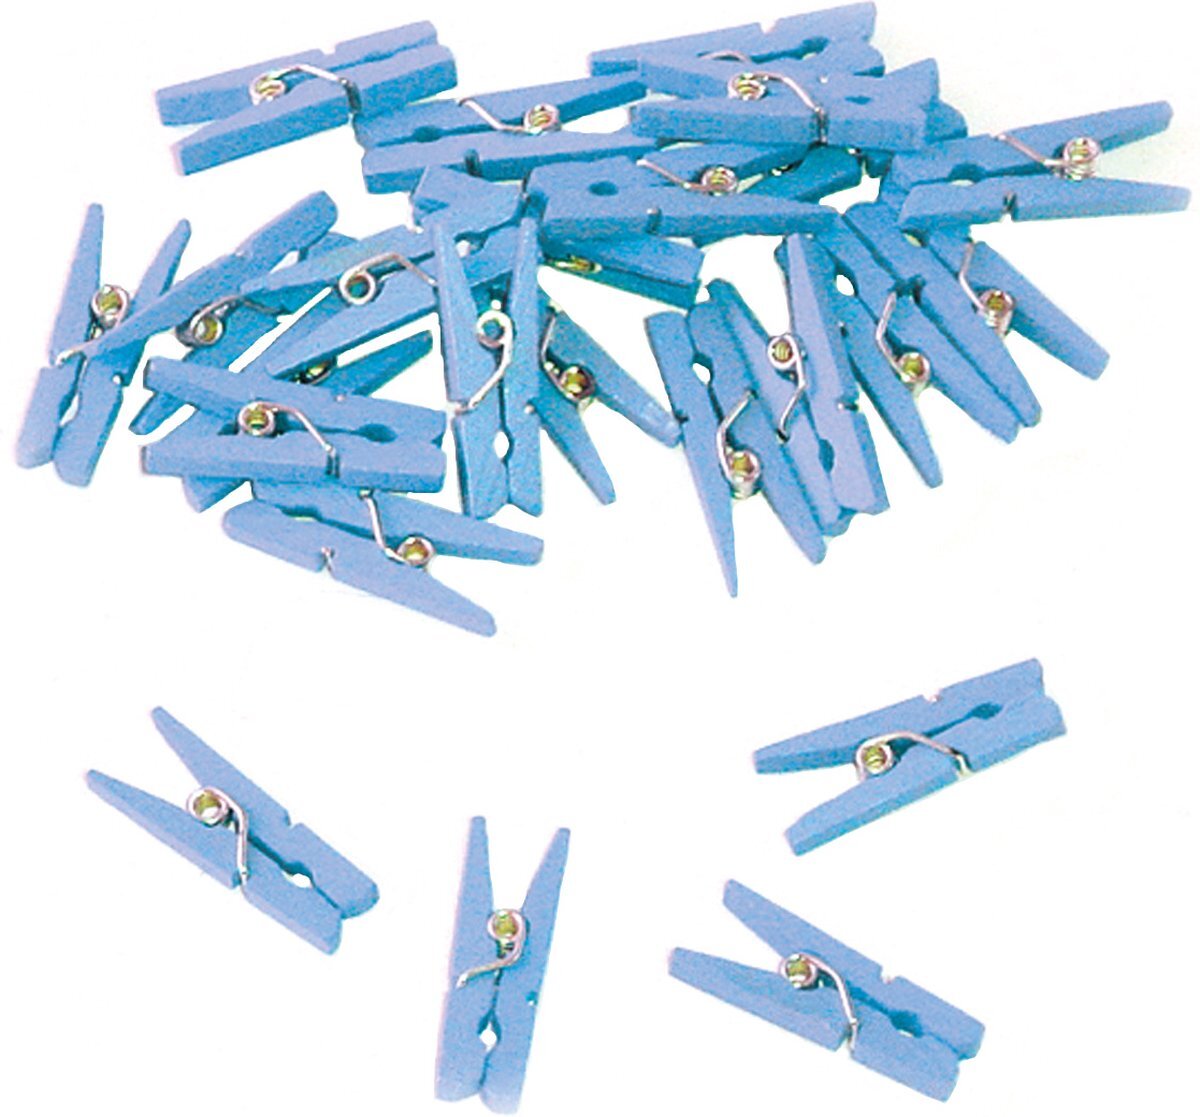 Folat Blauwe knijpers - 24 stuks